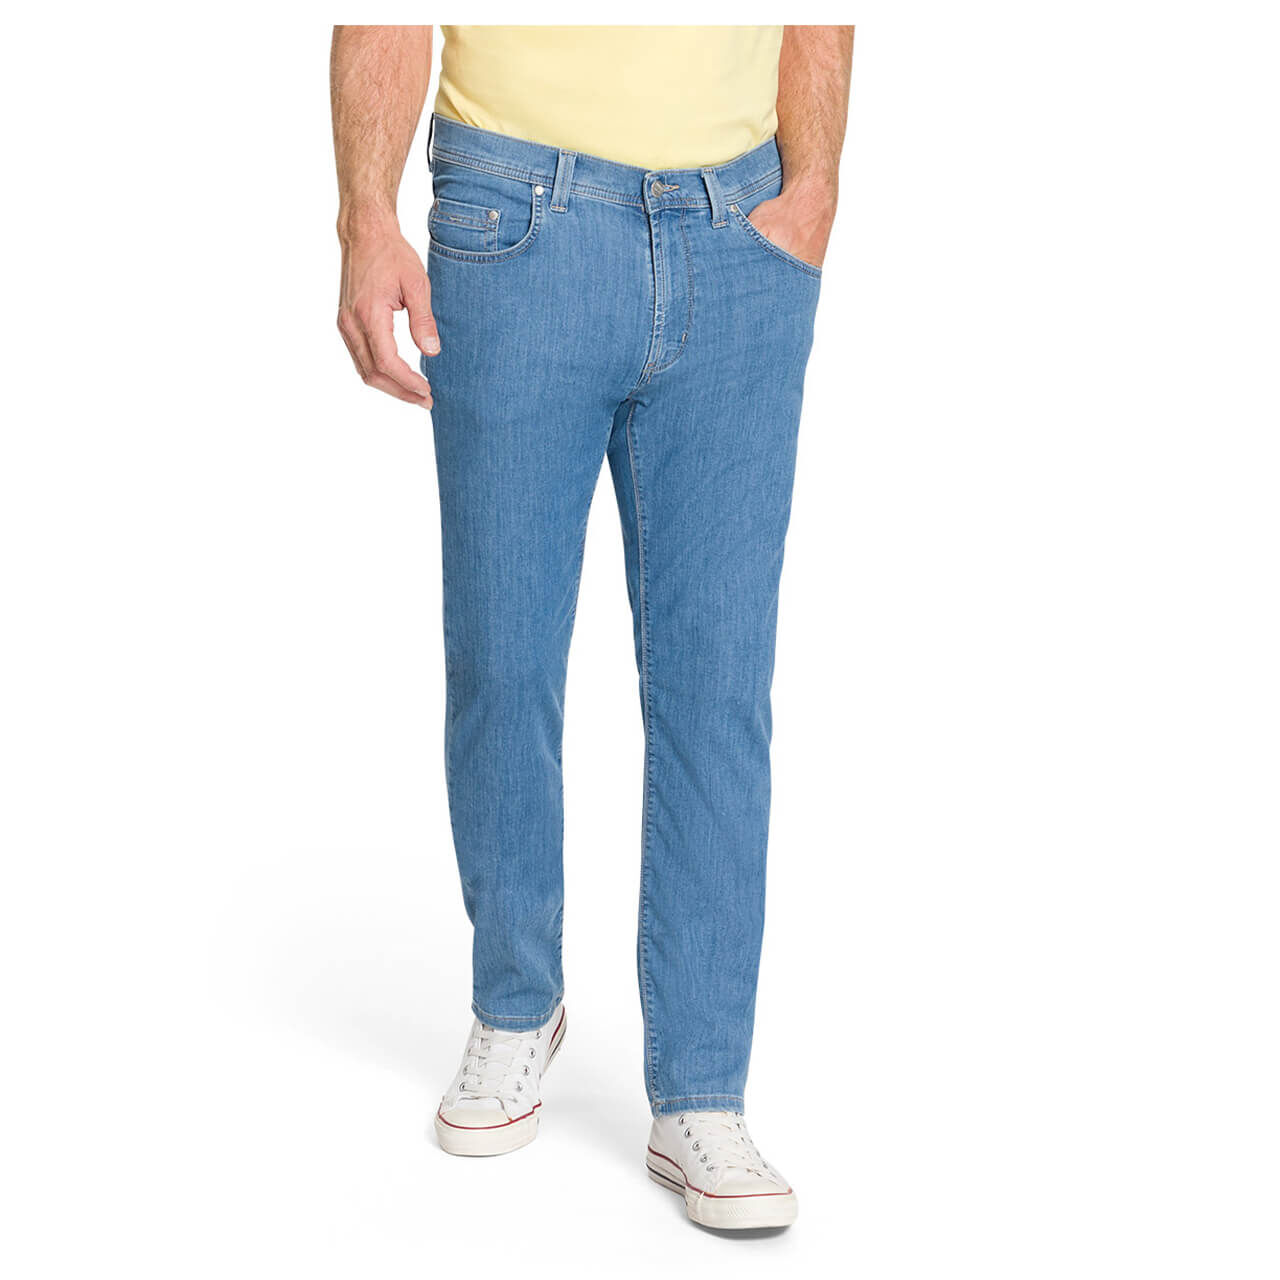 Pioneer Rando Jeans Megaflex light blue stonewash